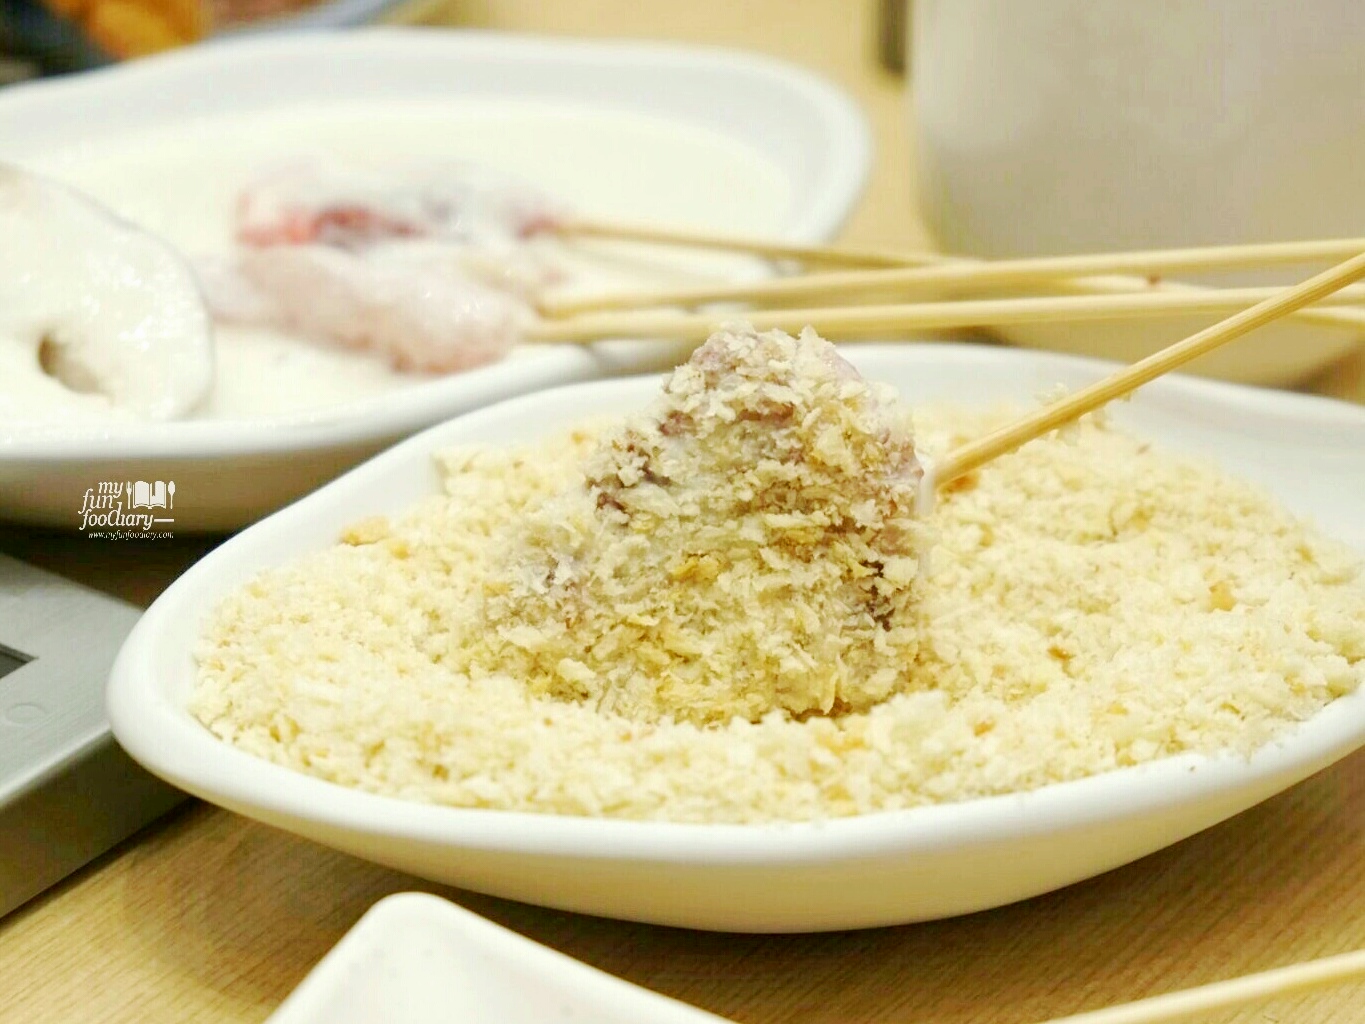 Dip into bread crumbs at Kushiya Monogatari by Myfunfoodiary